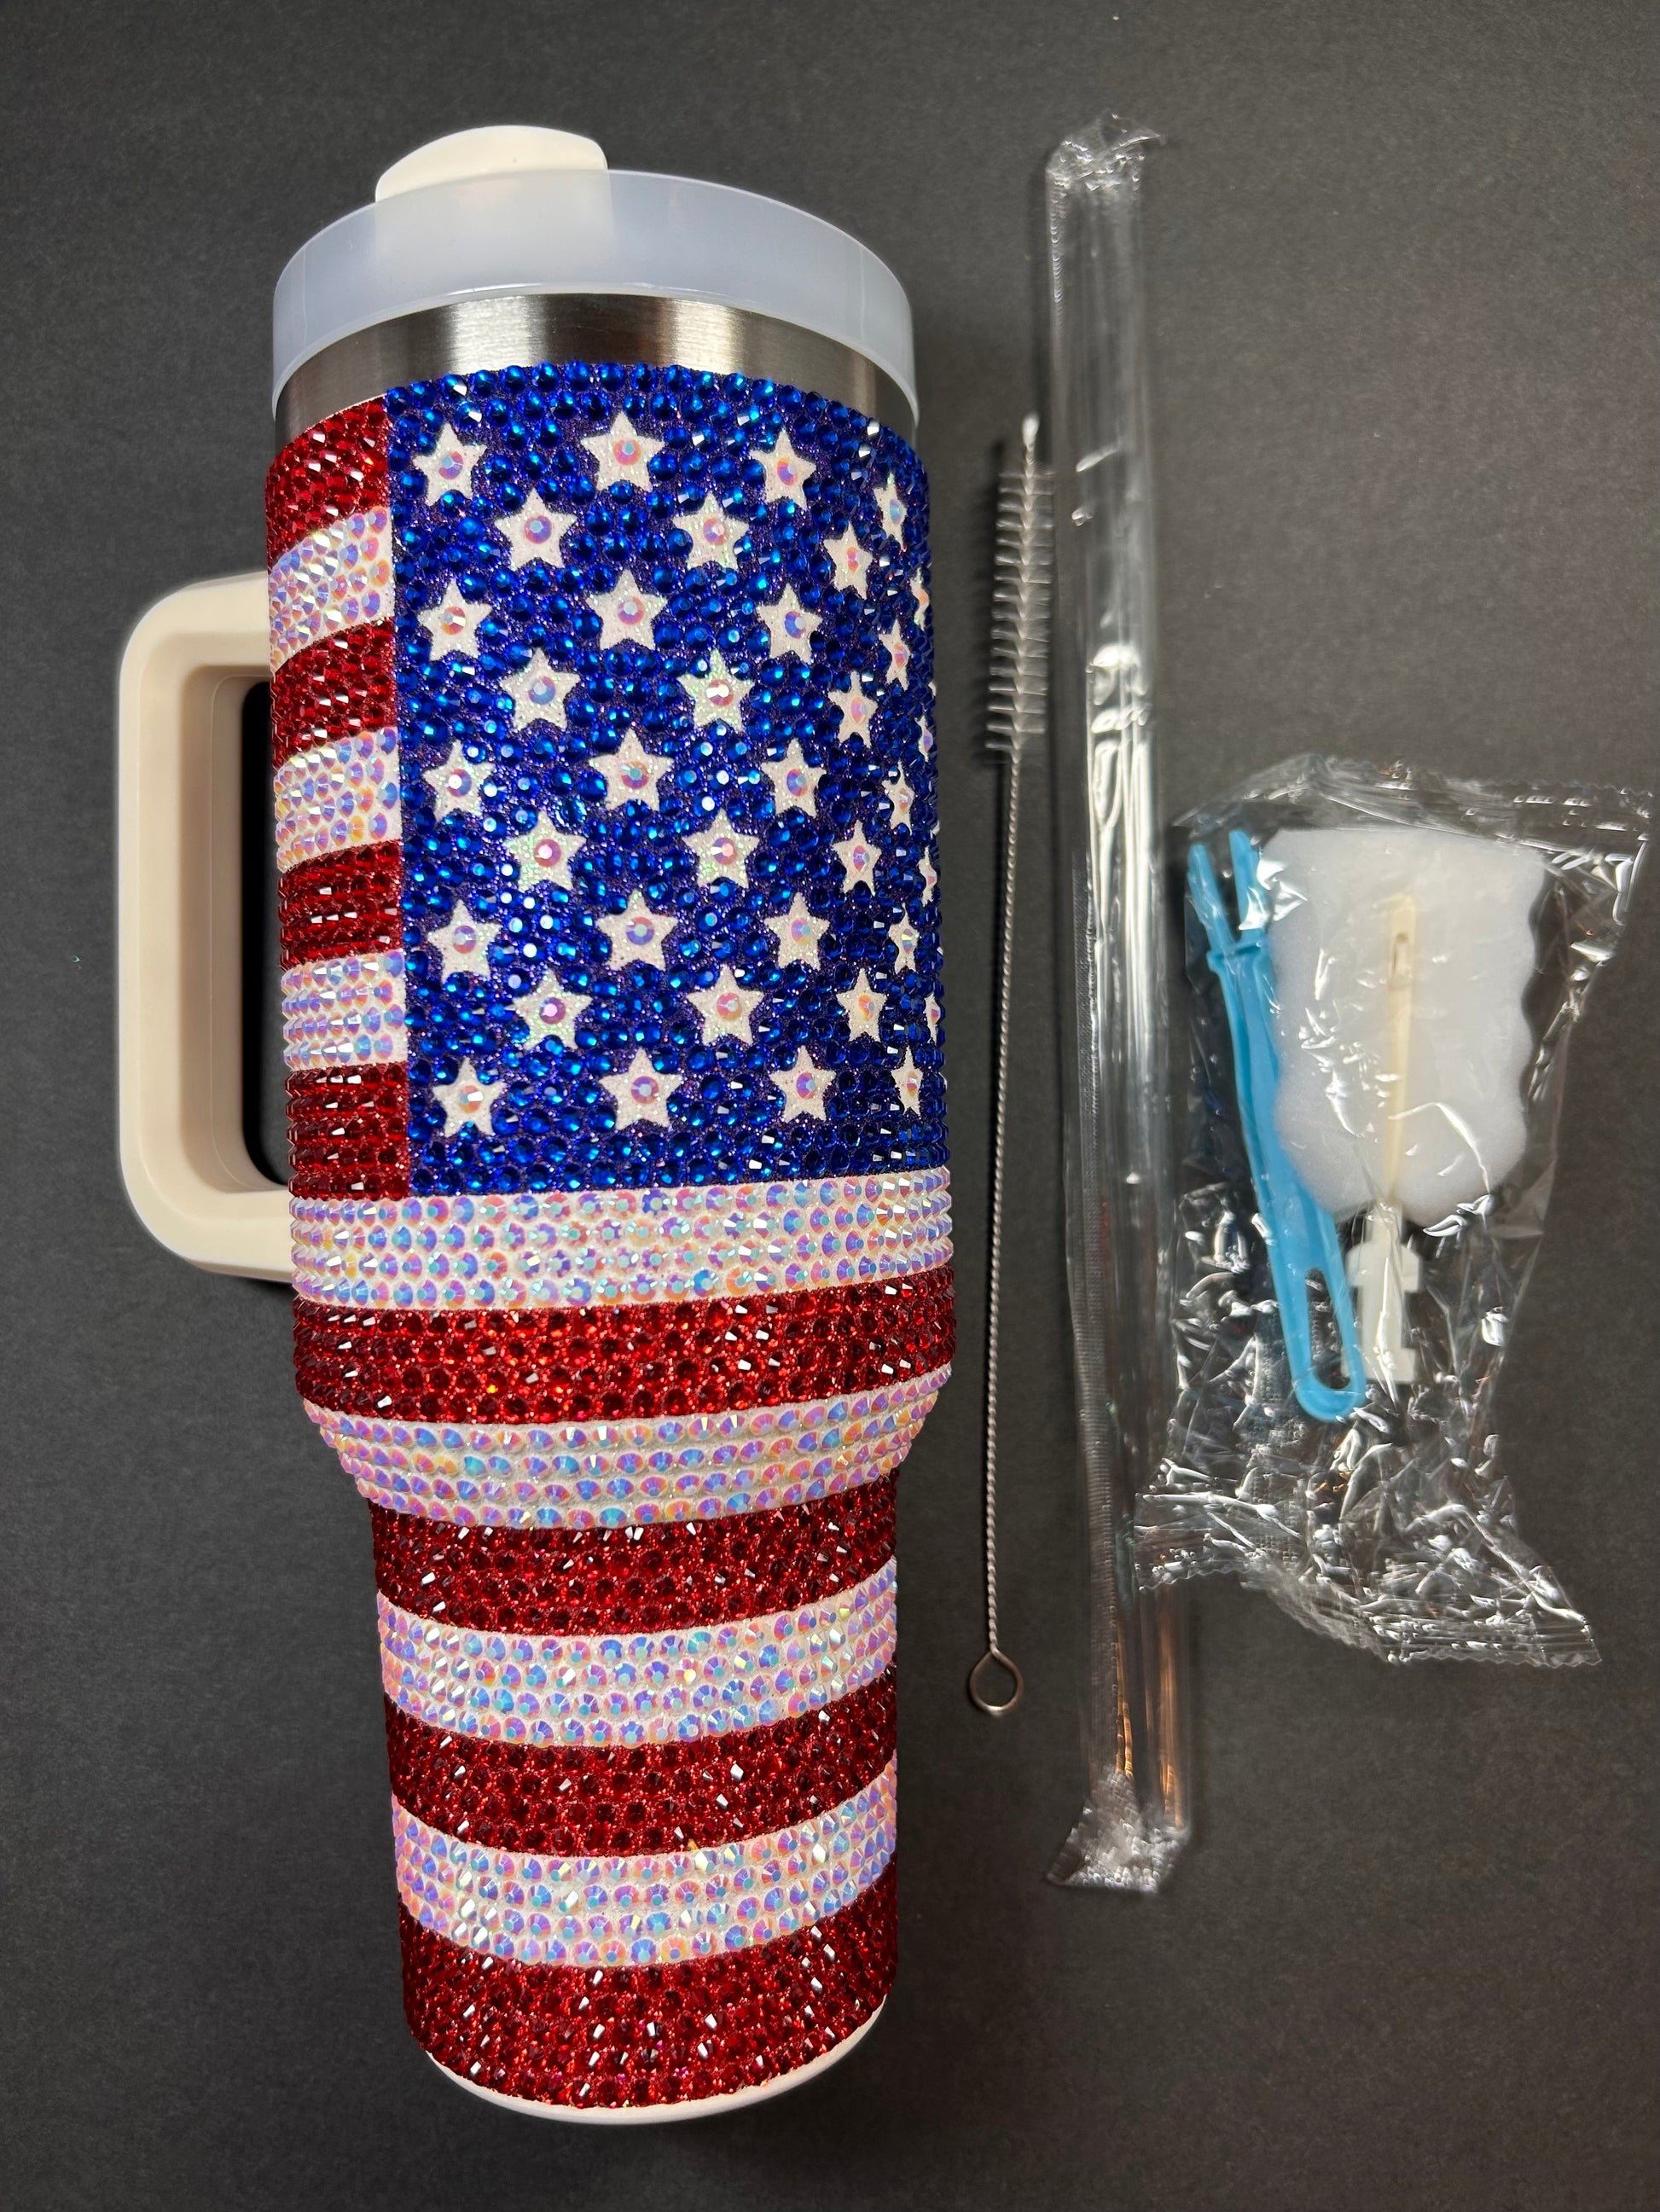 USA Rhinestone bedazzled 40oz Tumbler mug